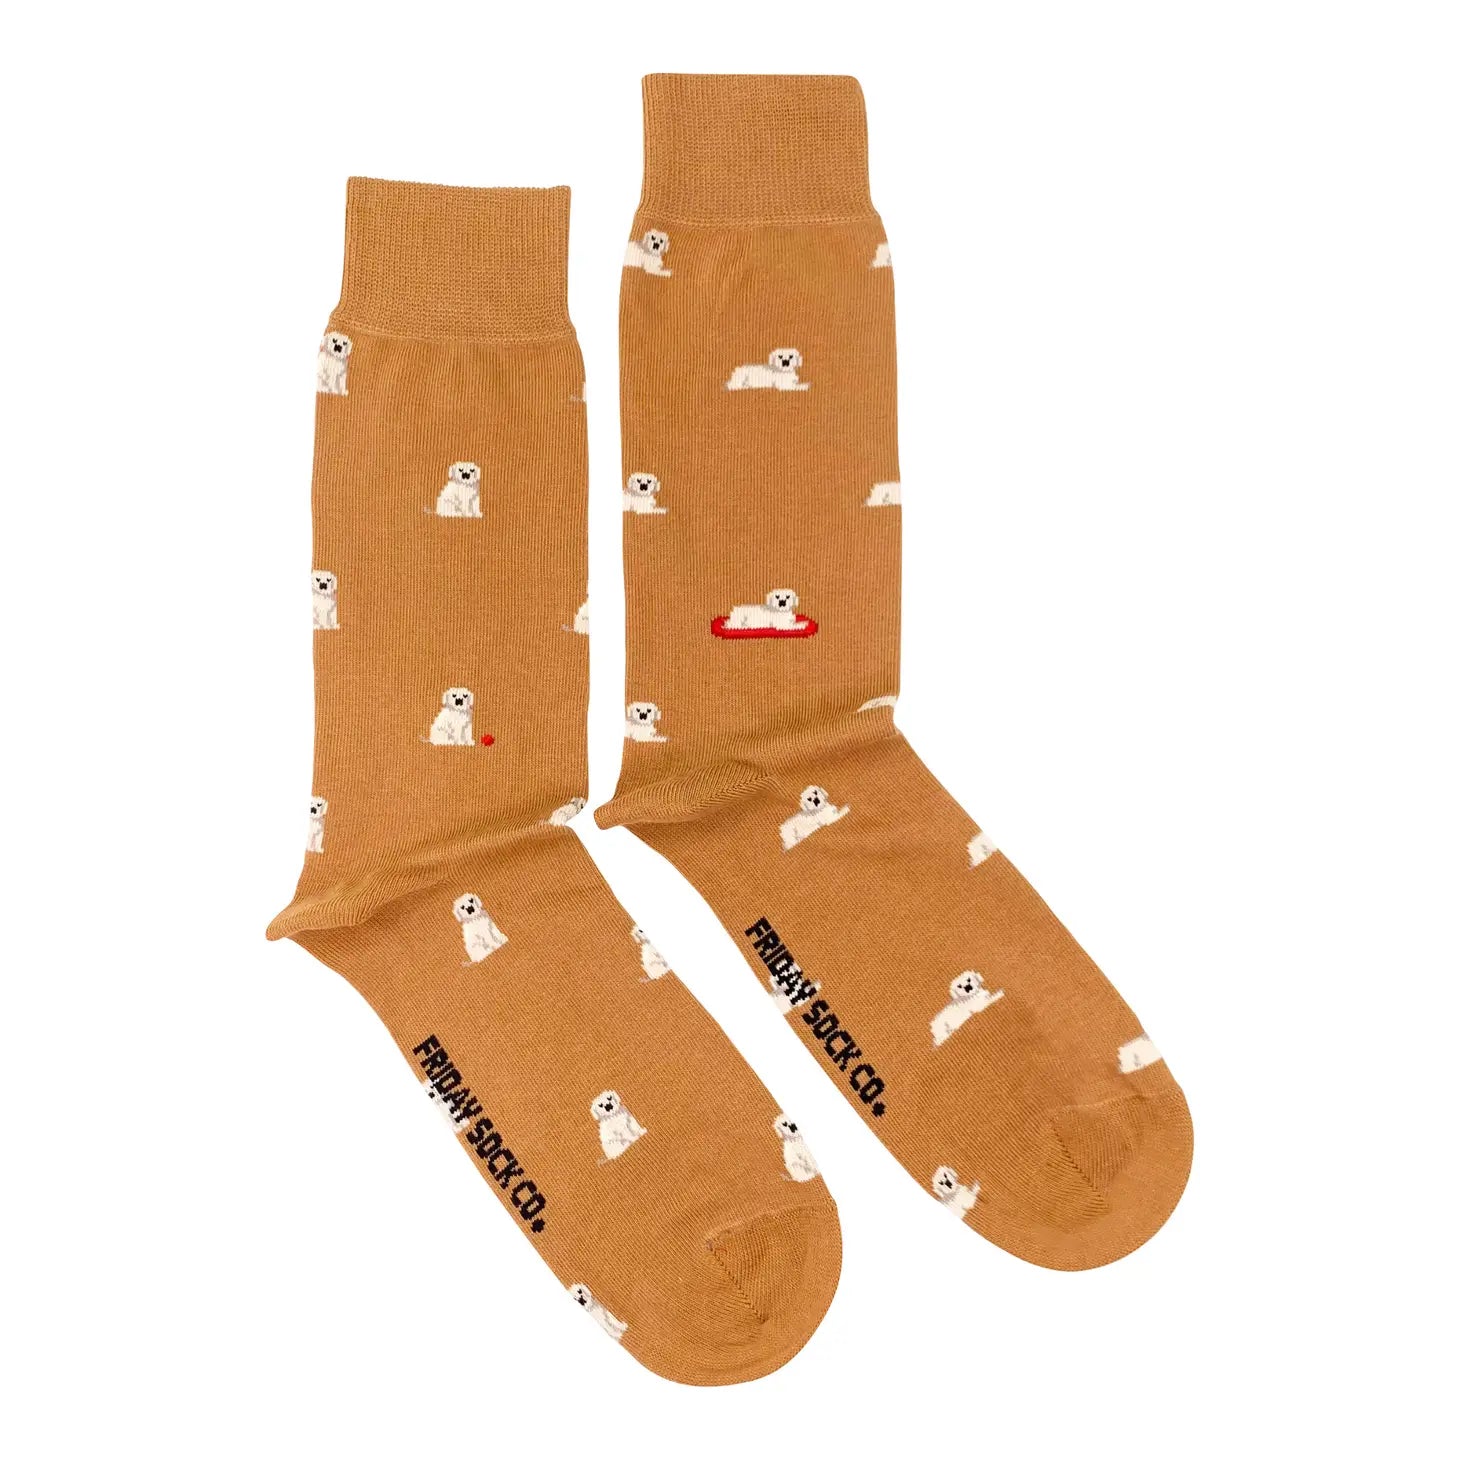 Friday Sock Co. - Men's Socks Ostrich